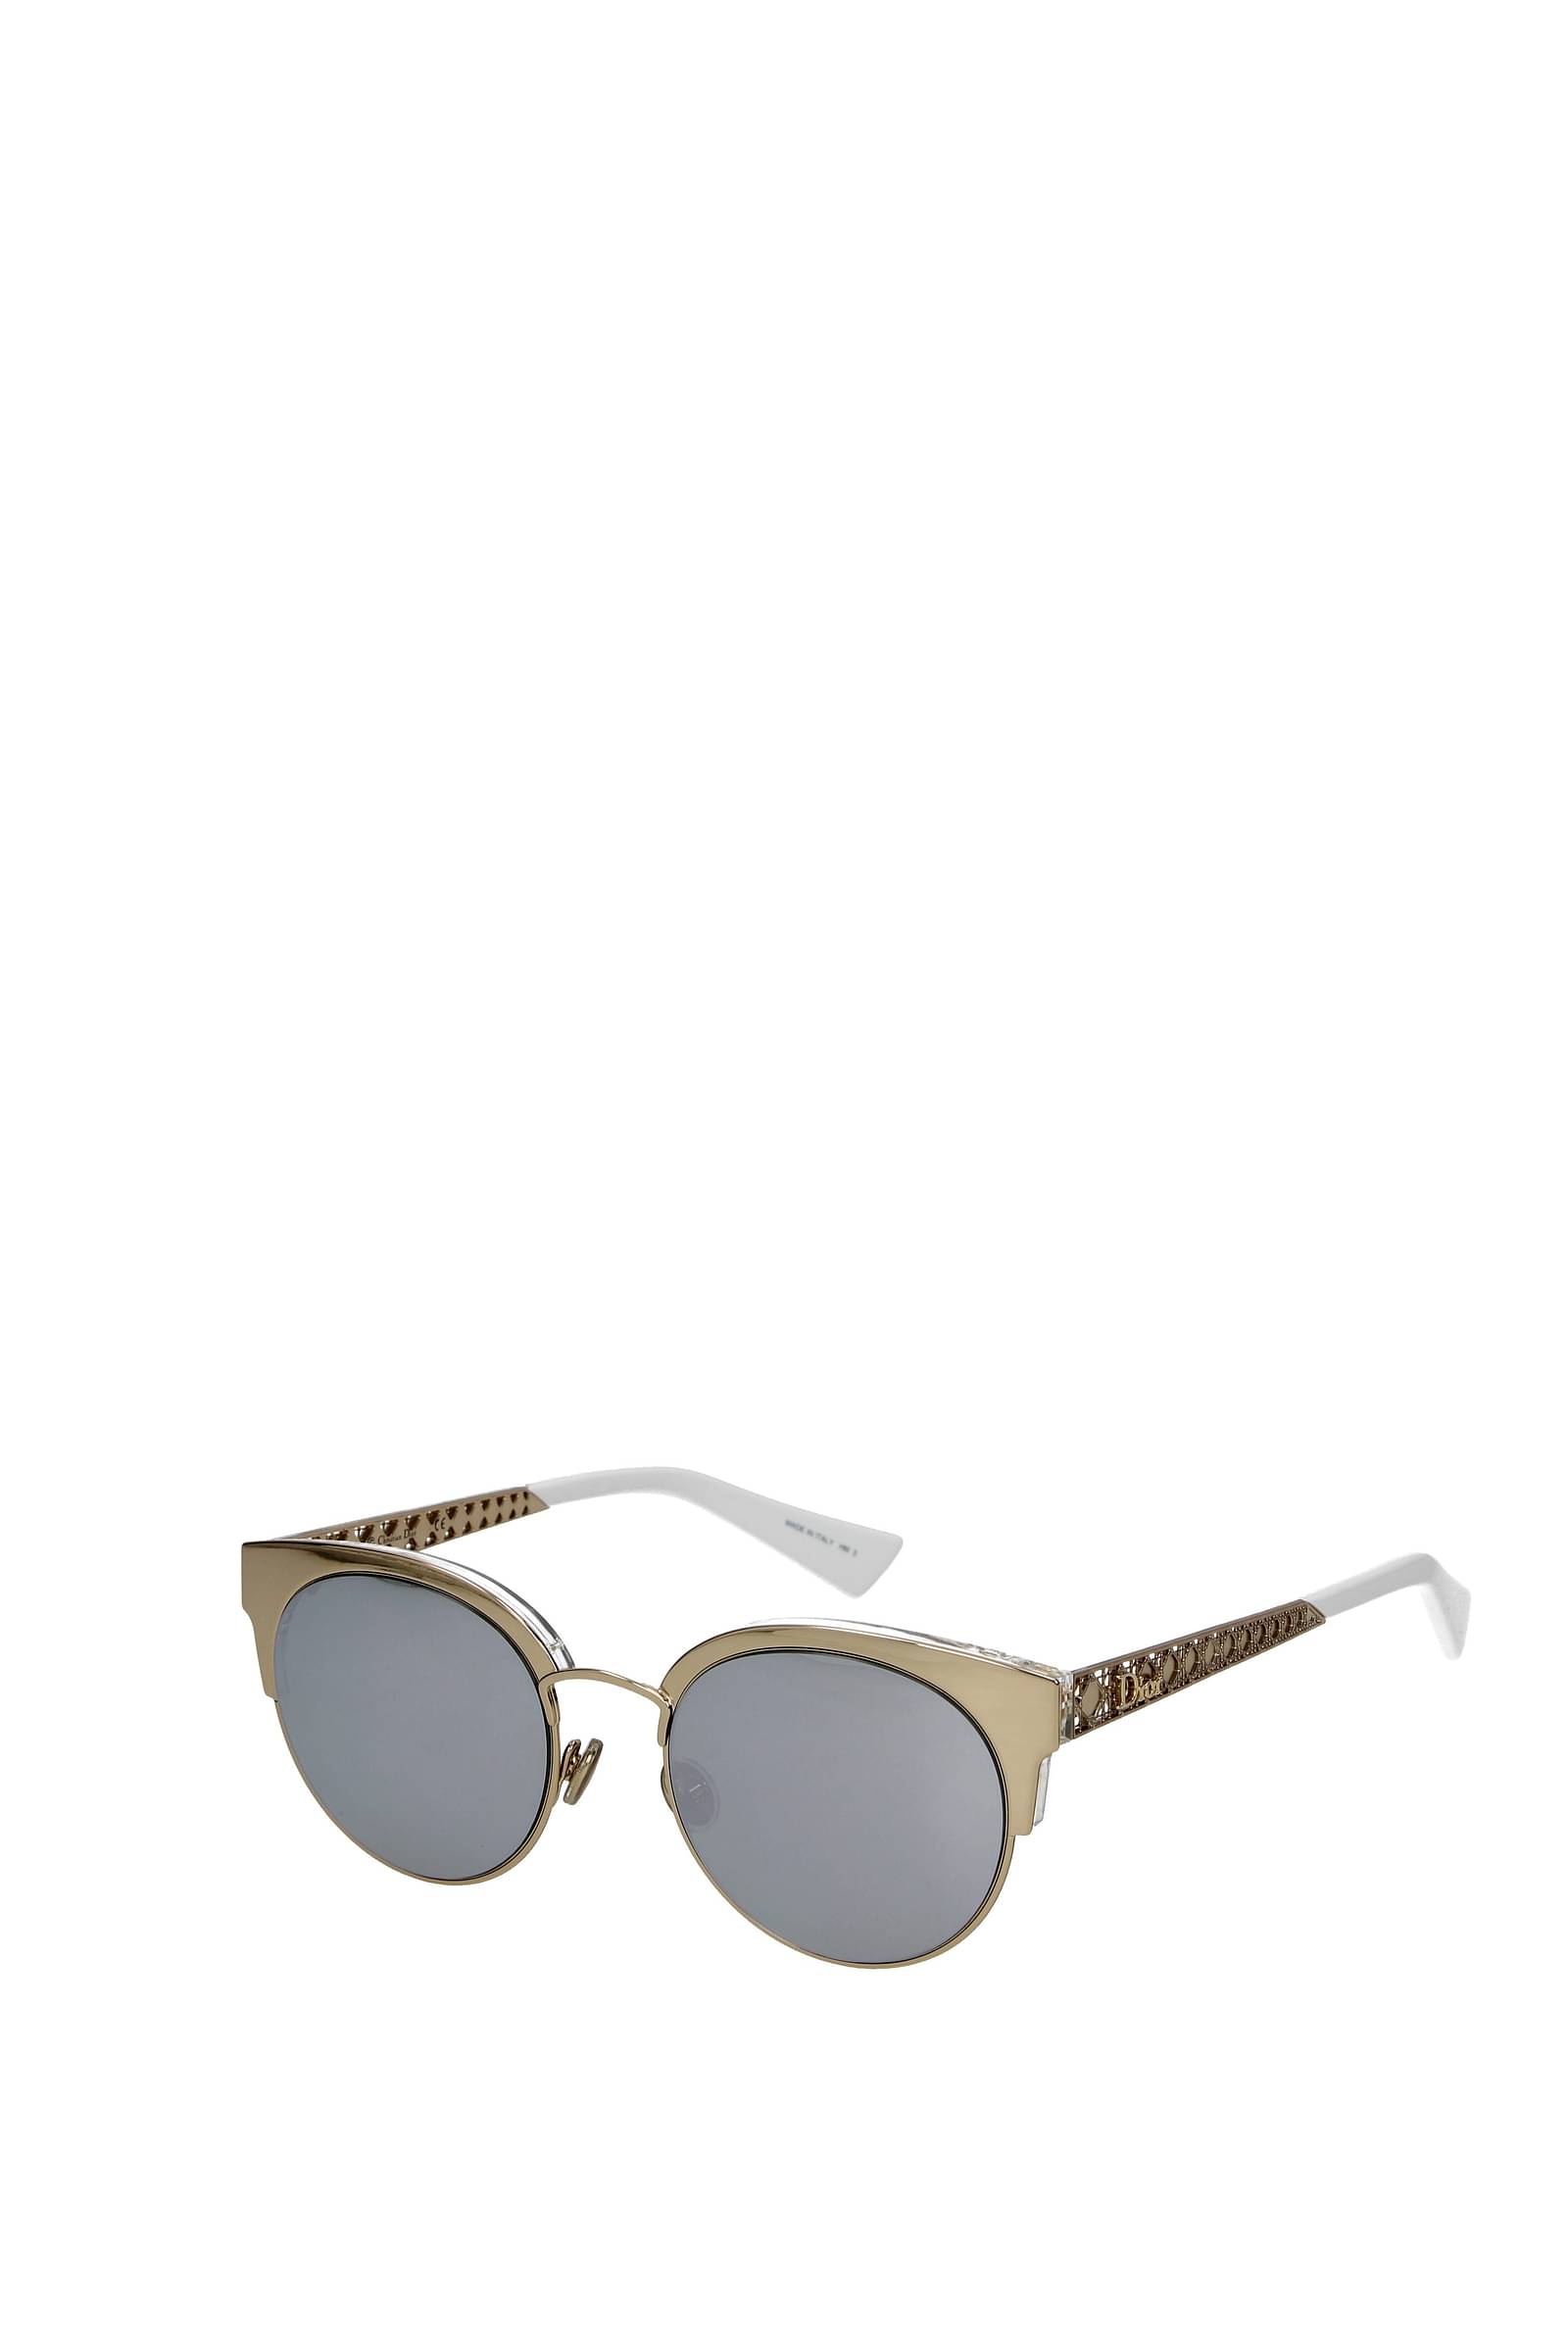 DIOR EYEWEAR DiorPacific B1U cateye acetate sunglasses  NETAPORTER